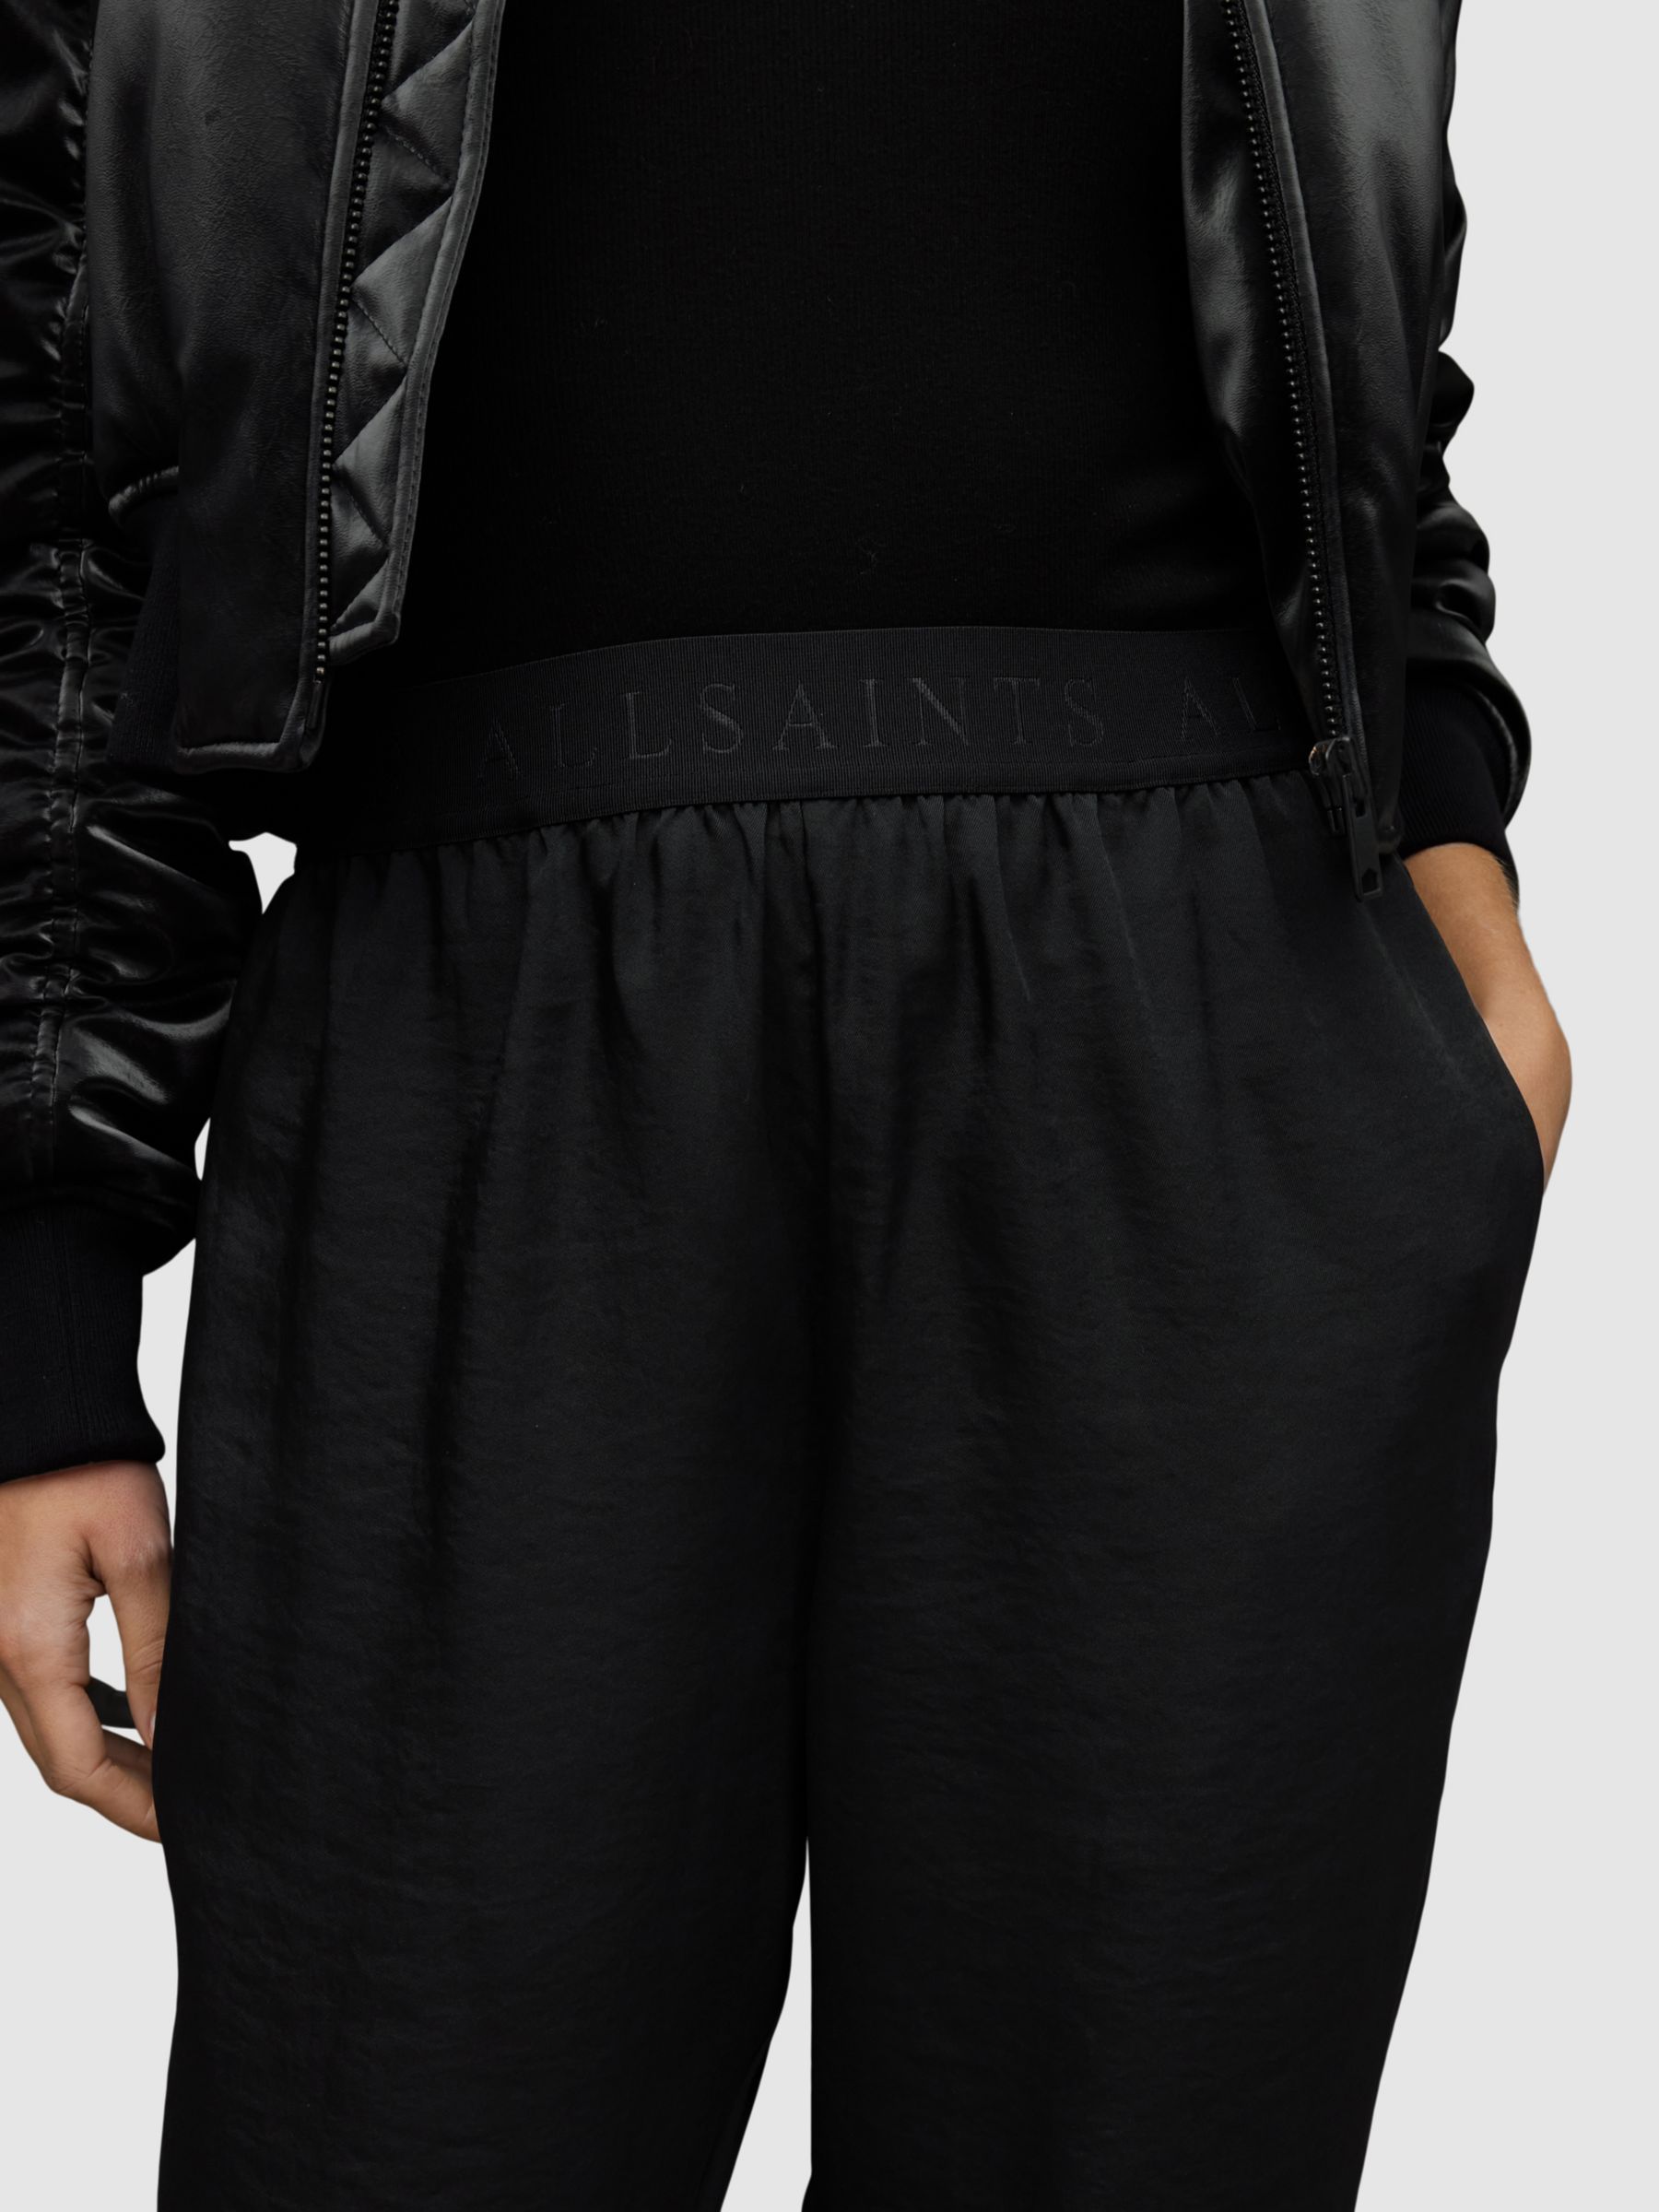 AllSaints Nala Tapered Trousers, Black at John Lewis & Partners